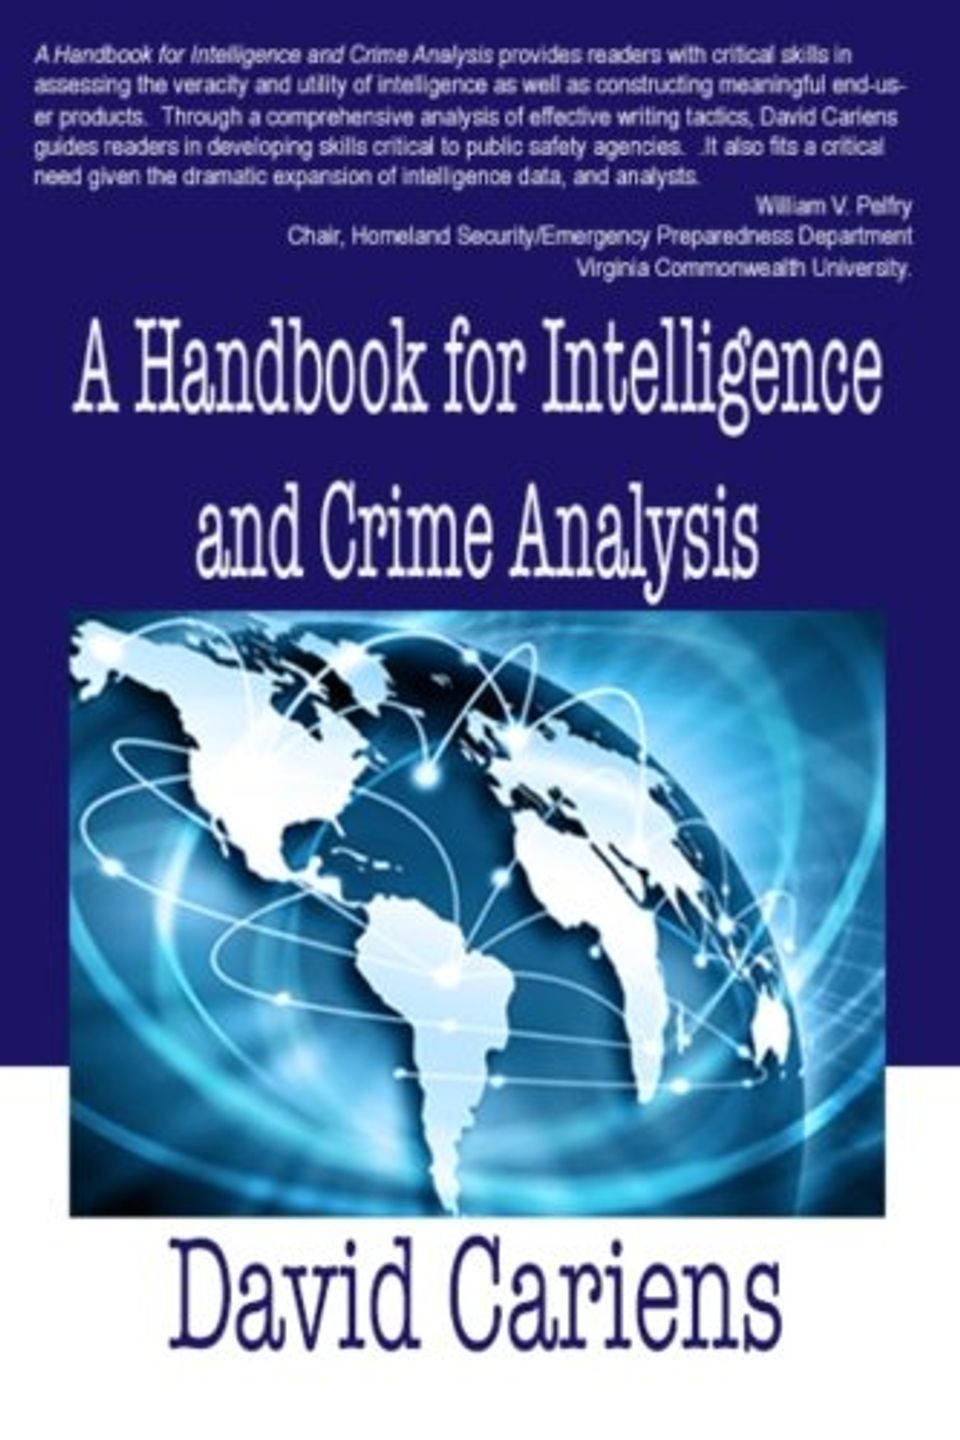 David cariens a handbook for intel